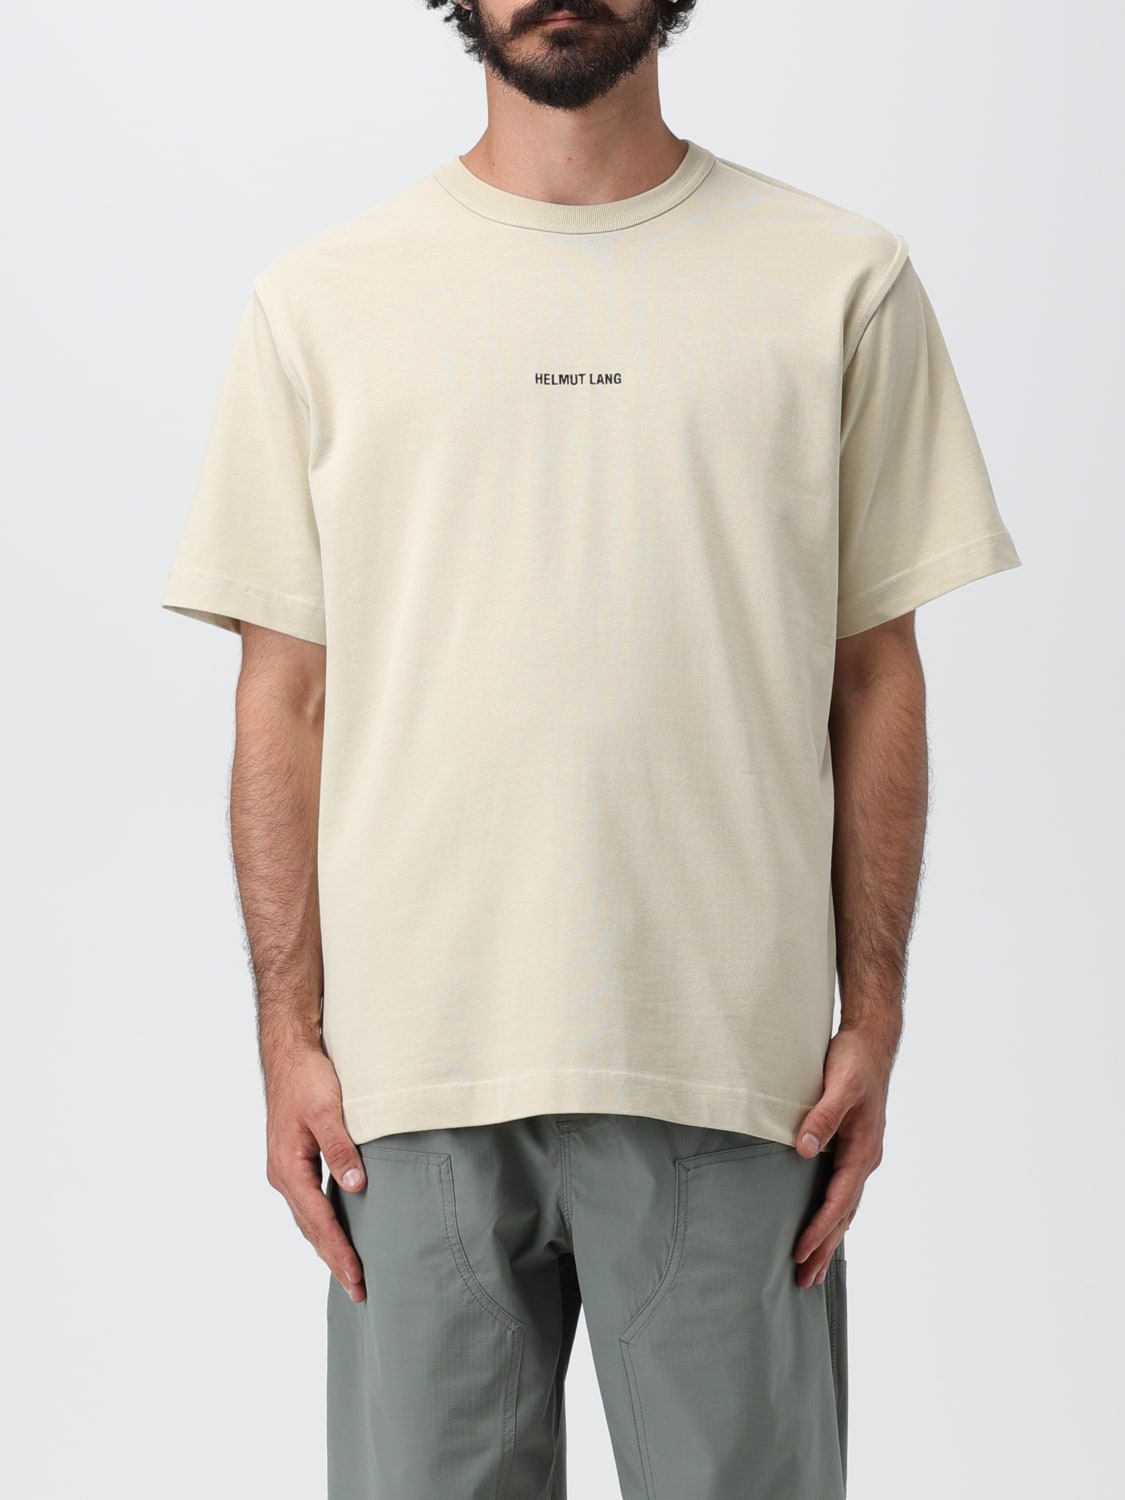 HELMUT LANG: t-shirt for men - Beige | Helmut Lang t-shirt